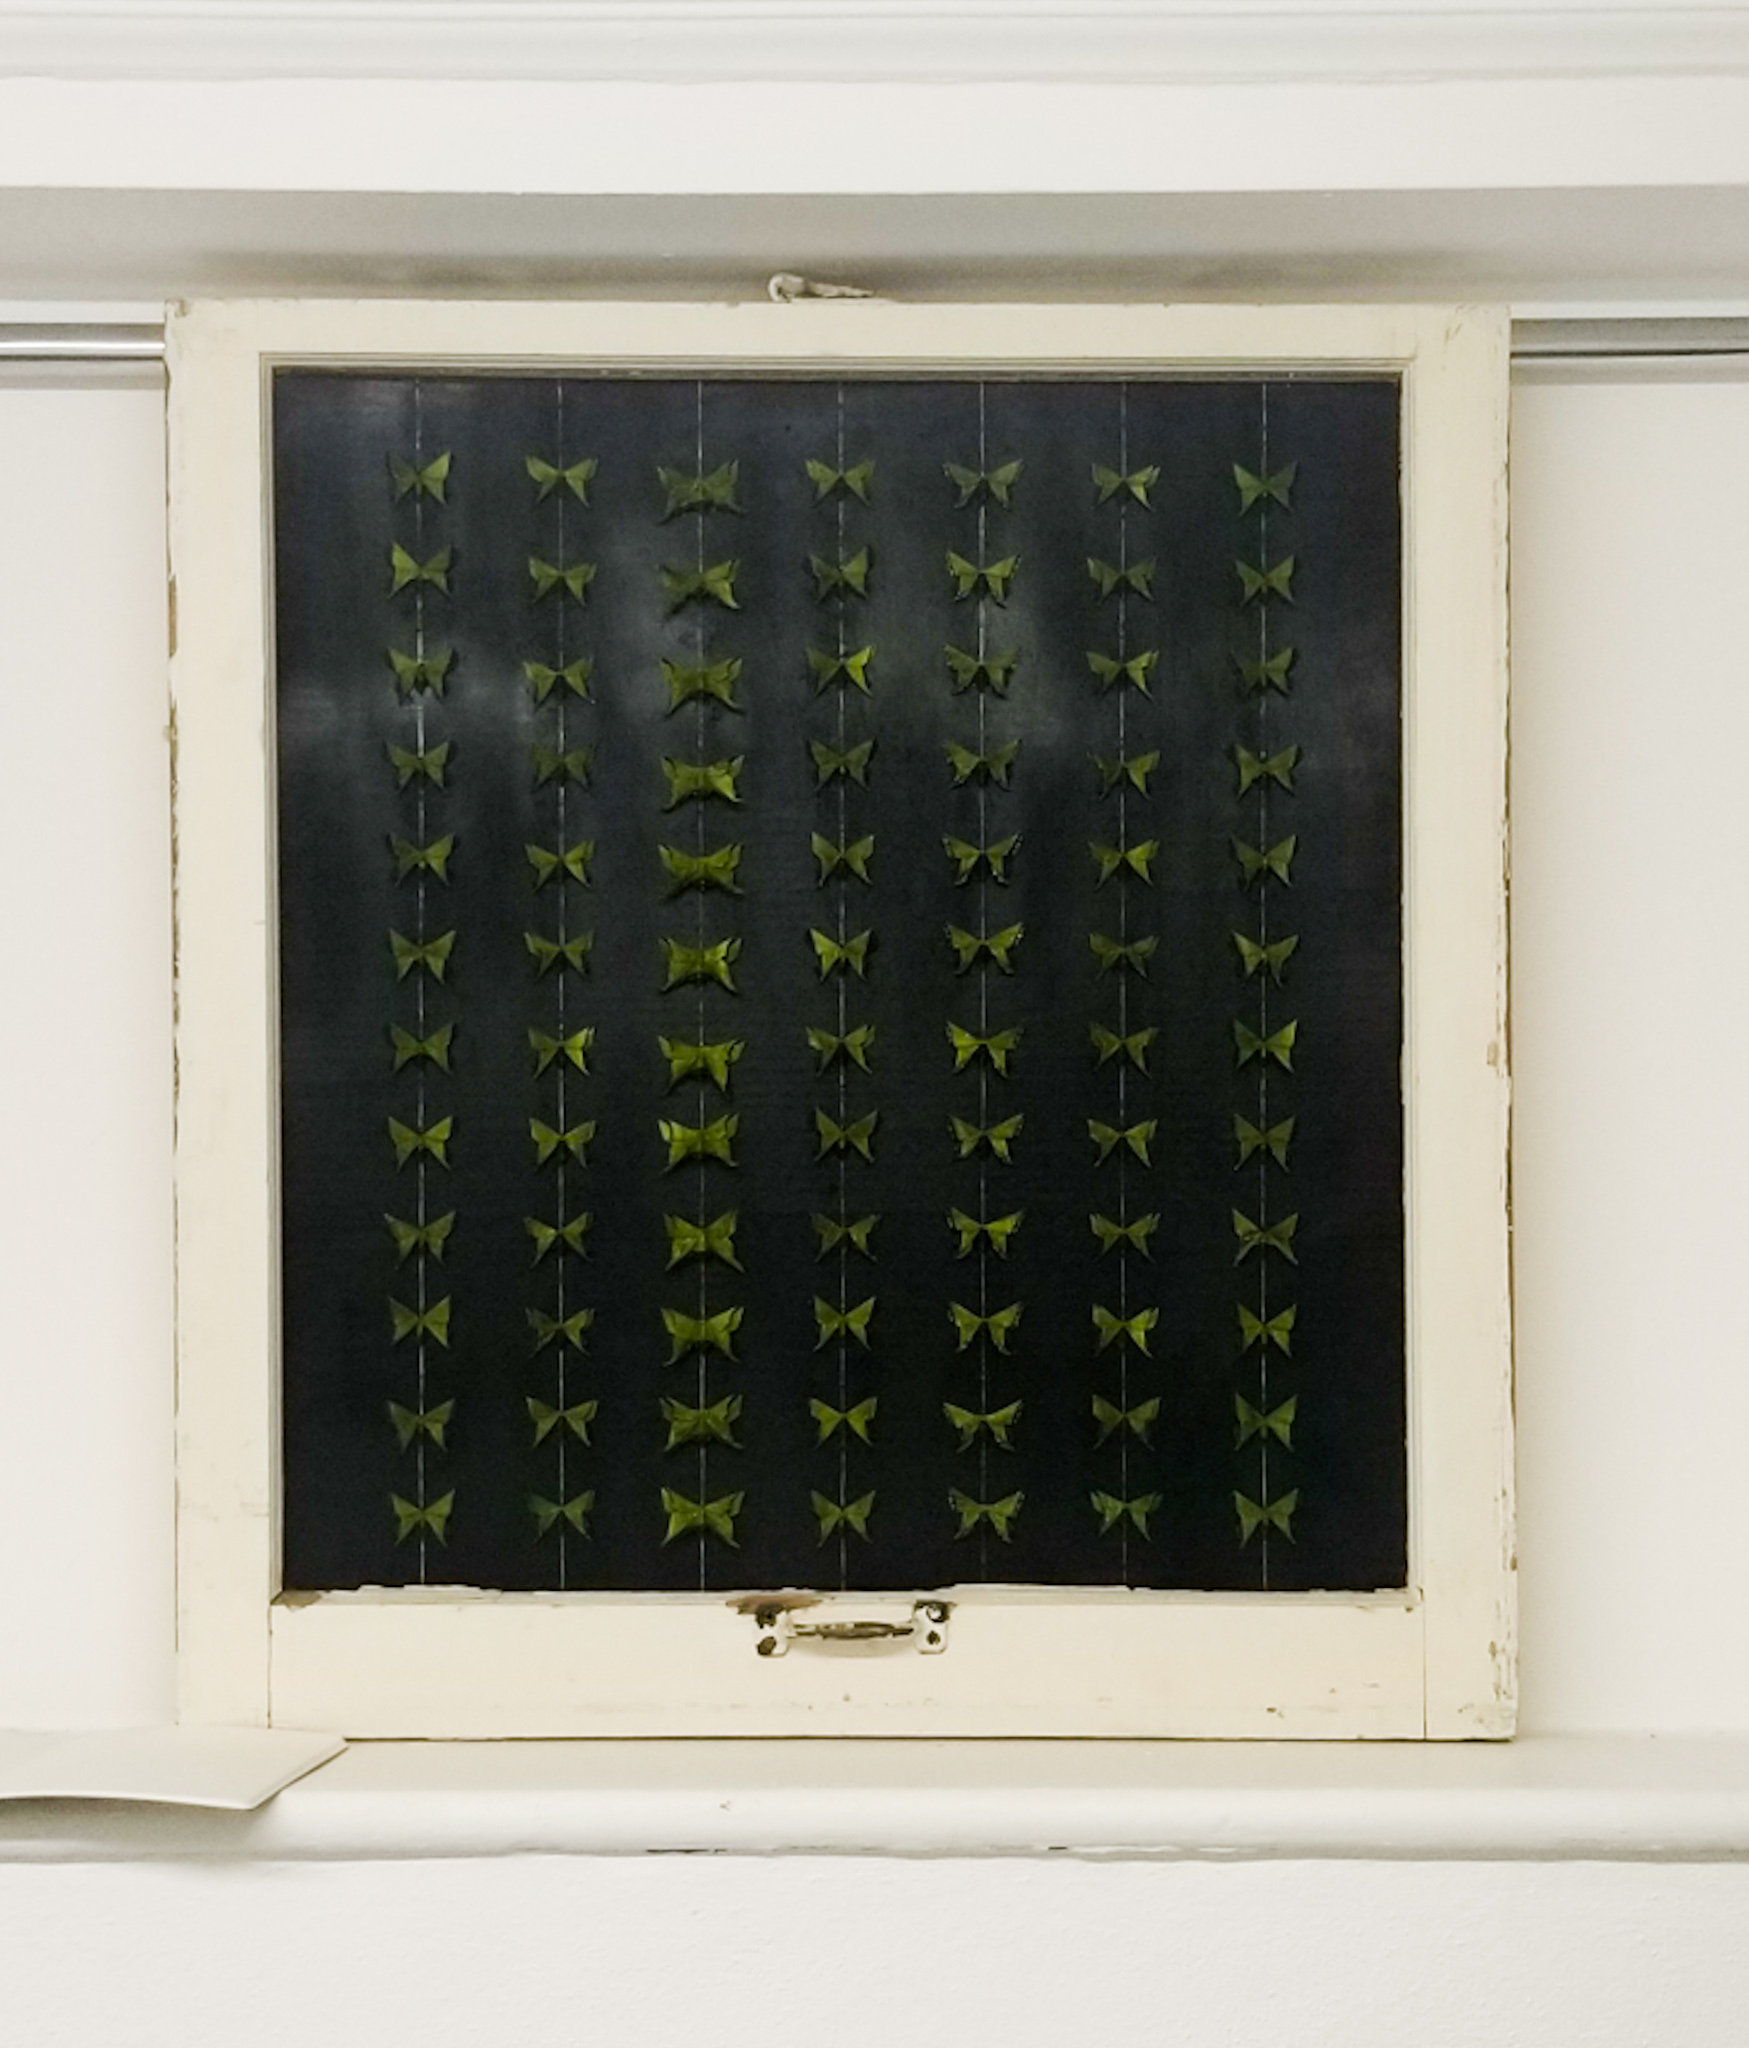 Fine Art work by Cydnee Inmon showing 90 green origami butterflies lined up in a farmhouse window frame.